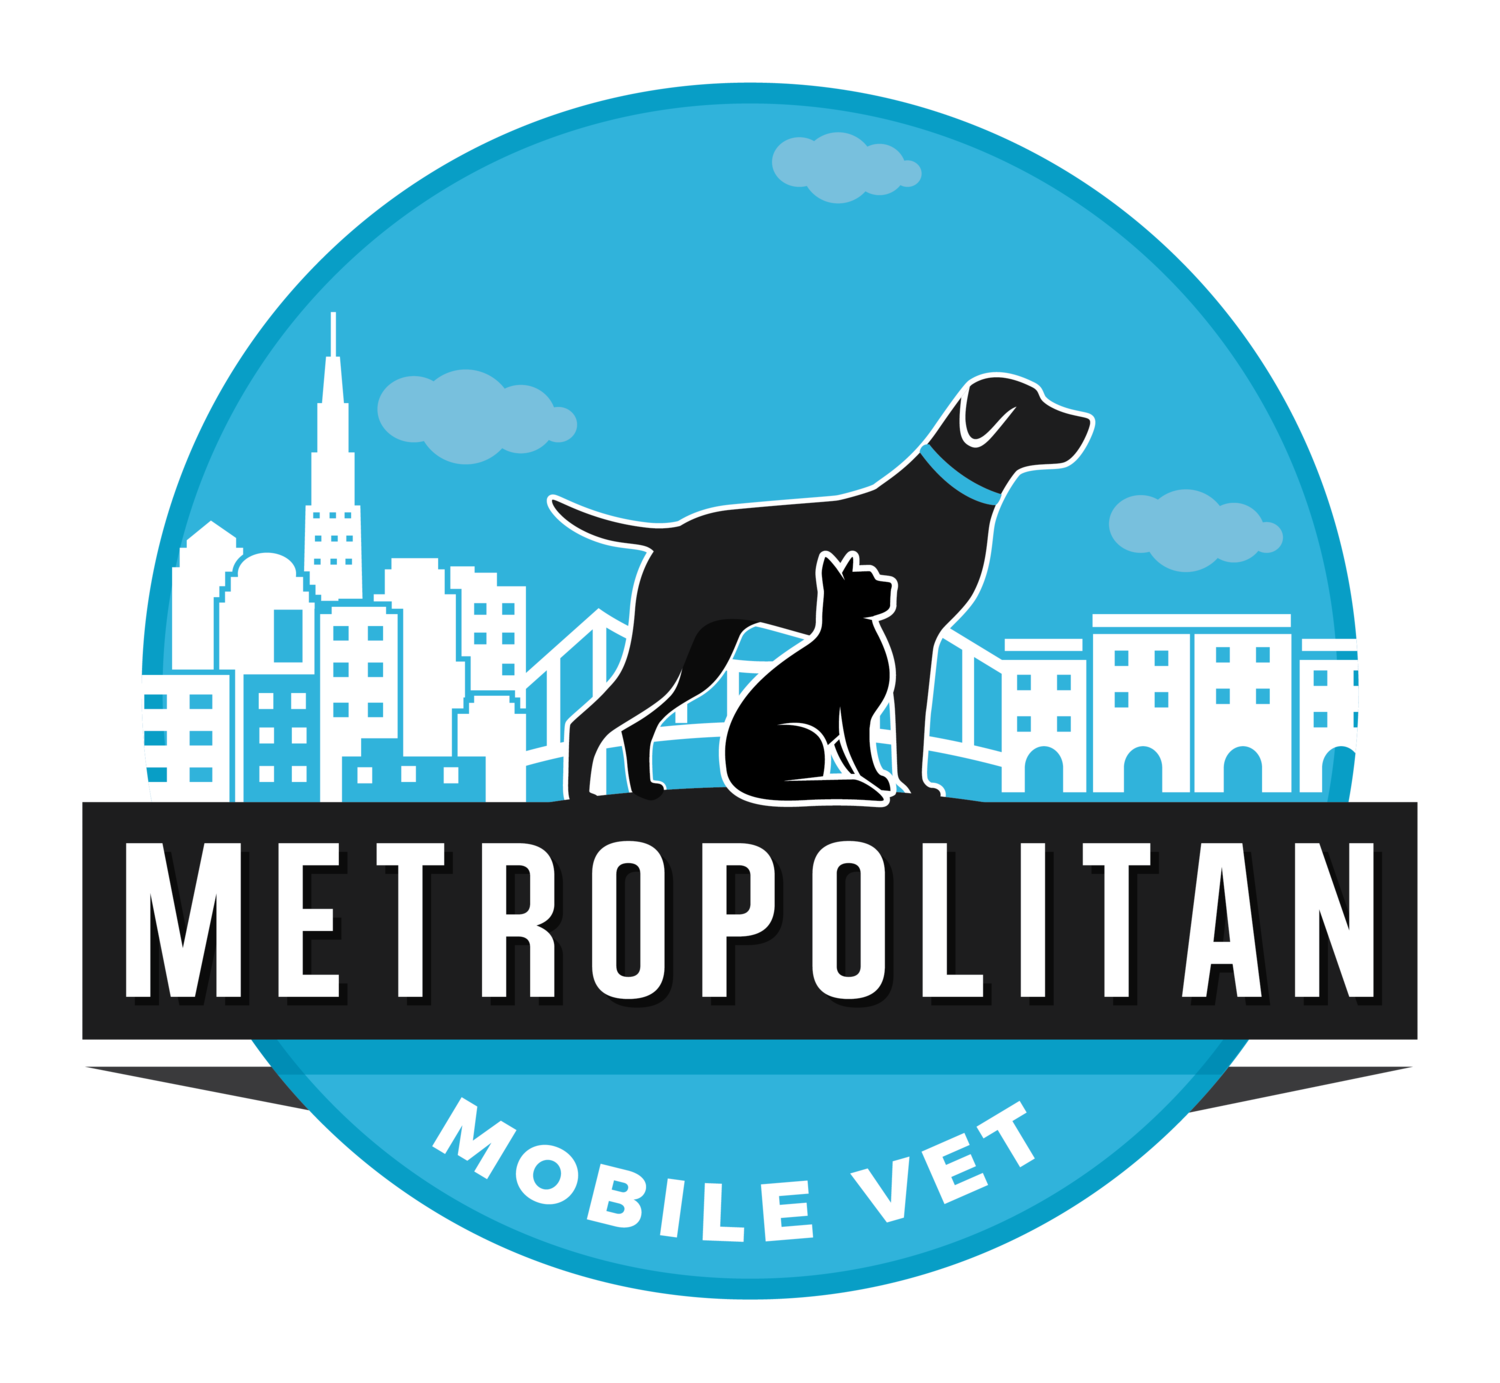 Metropolitan Mobile Vet